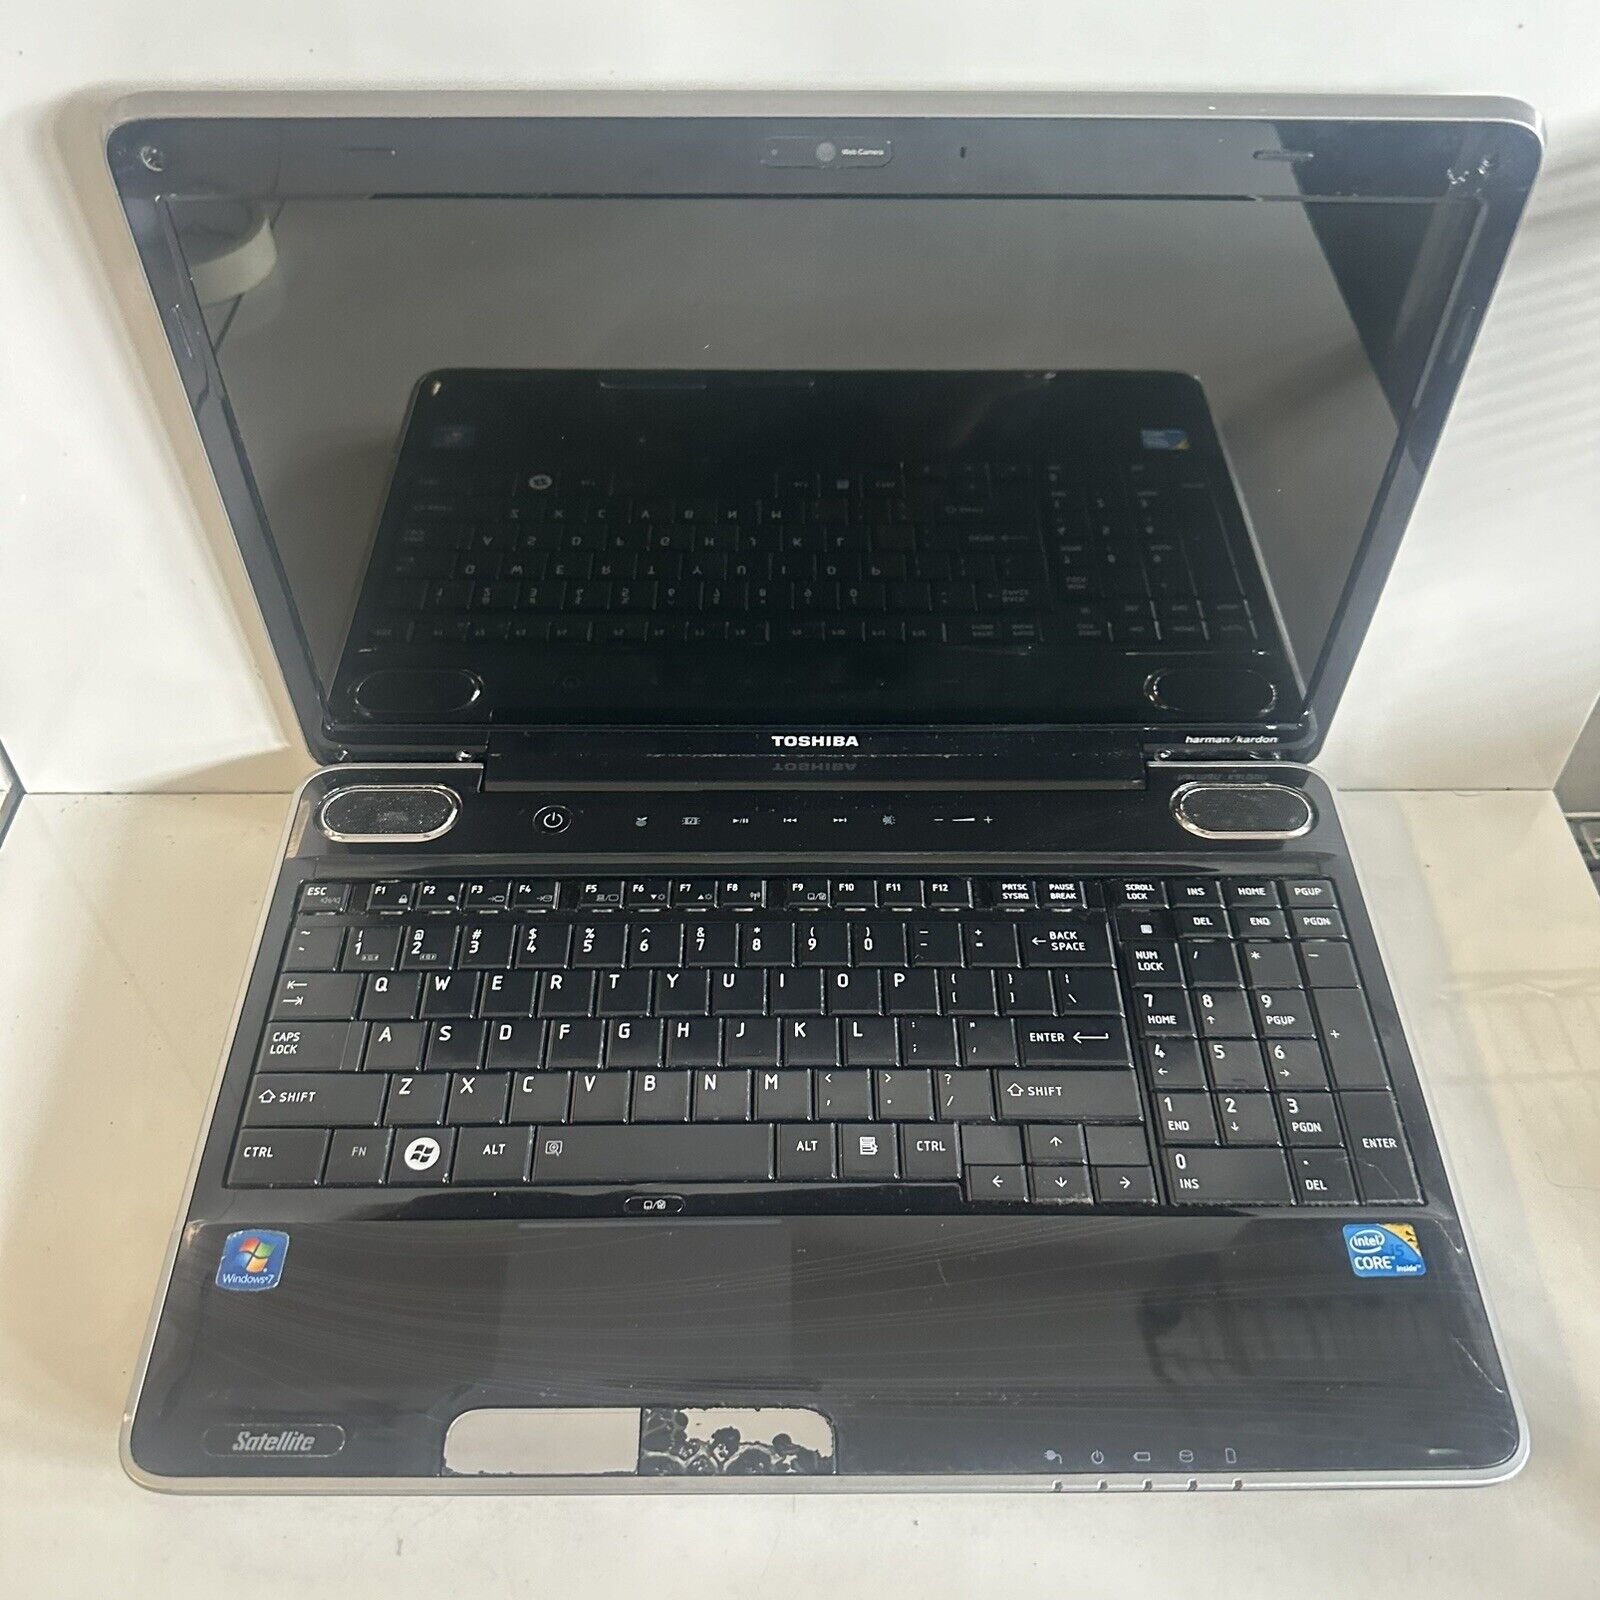 Toshiba Satellite A505-S6017 15.6” Laptop Intel Core i5 Scraps/Salvage